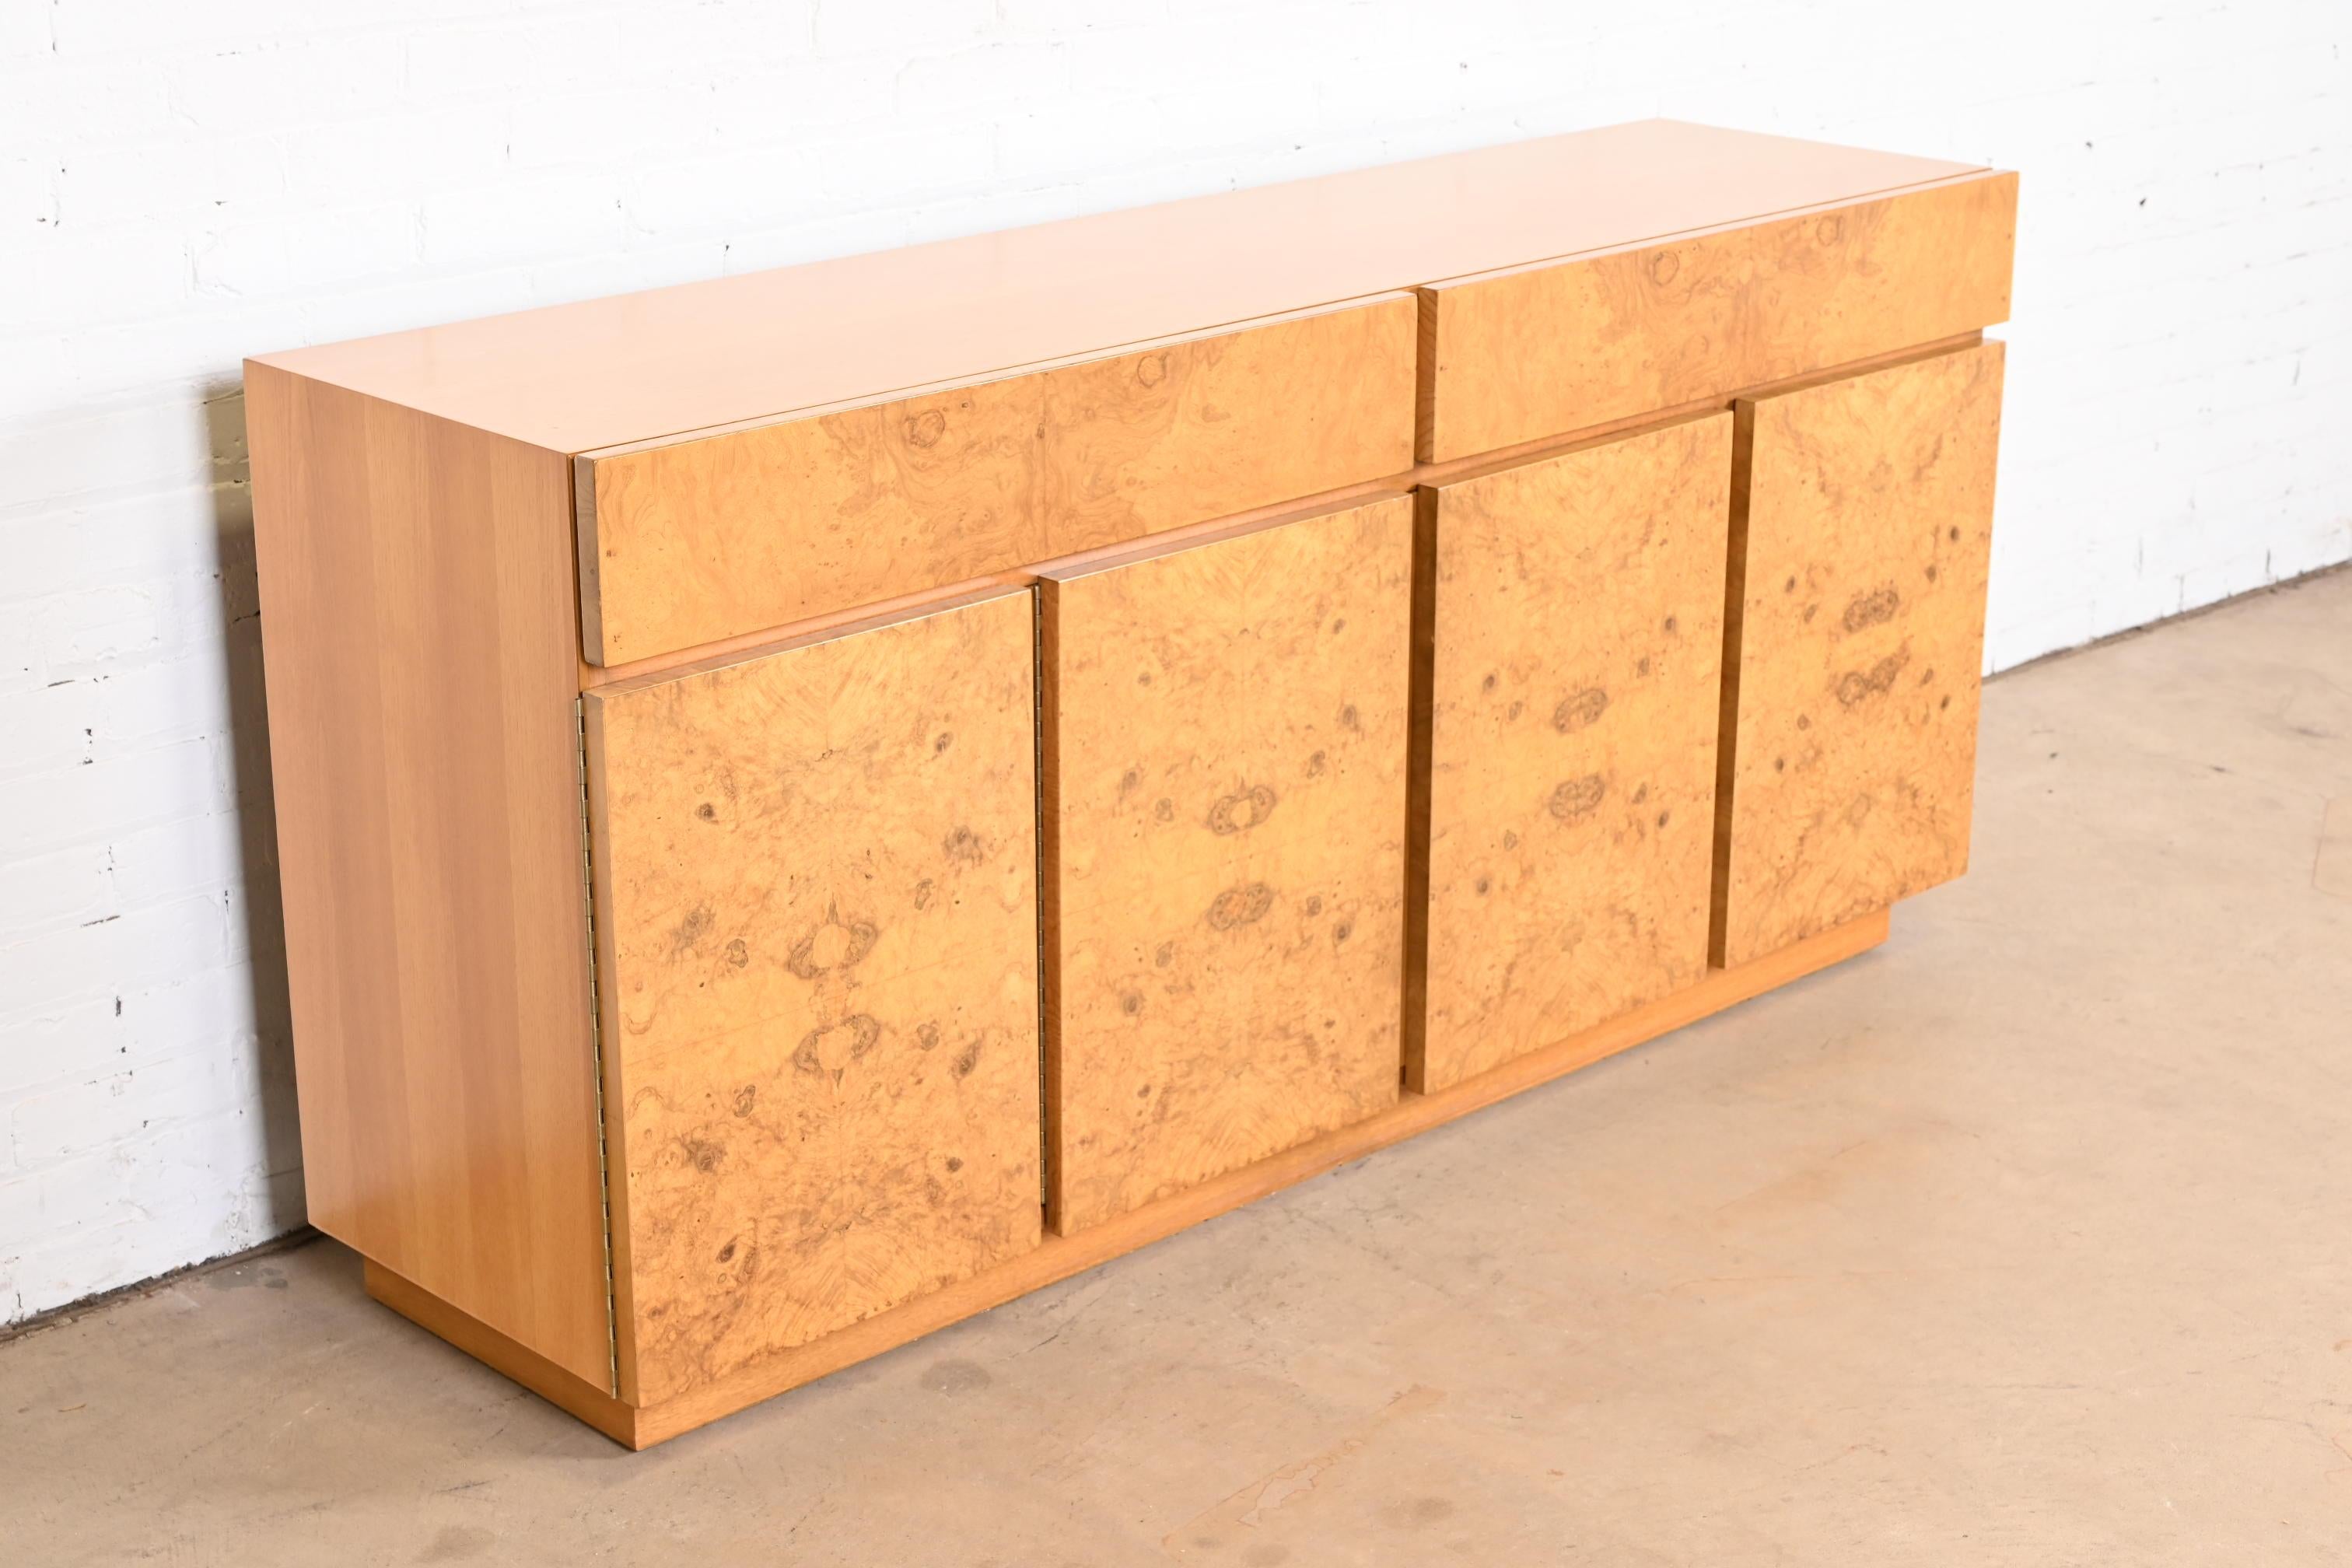 Ash Milo Baughman Style Burl Wood Sideboard, Credenza, or Bar Cabinet, Refinished For Sale